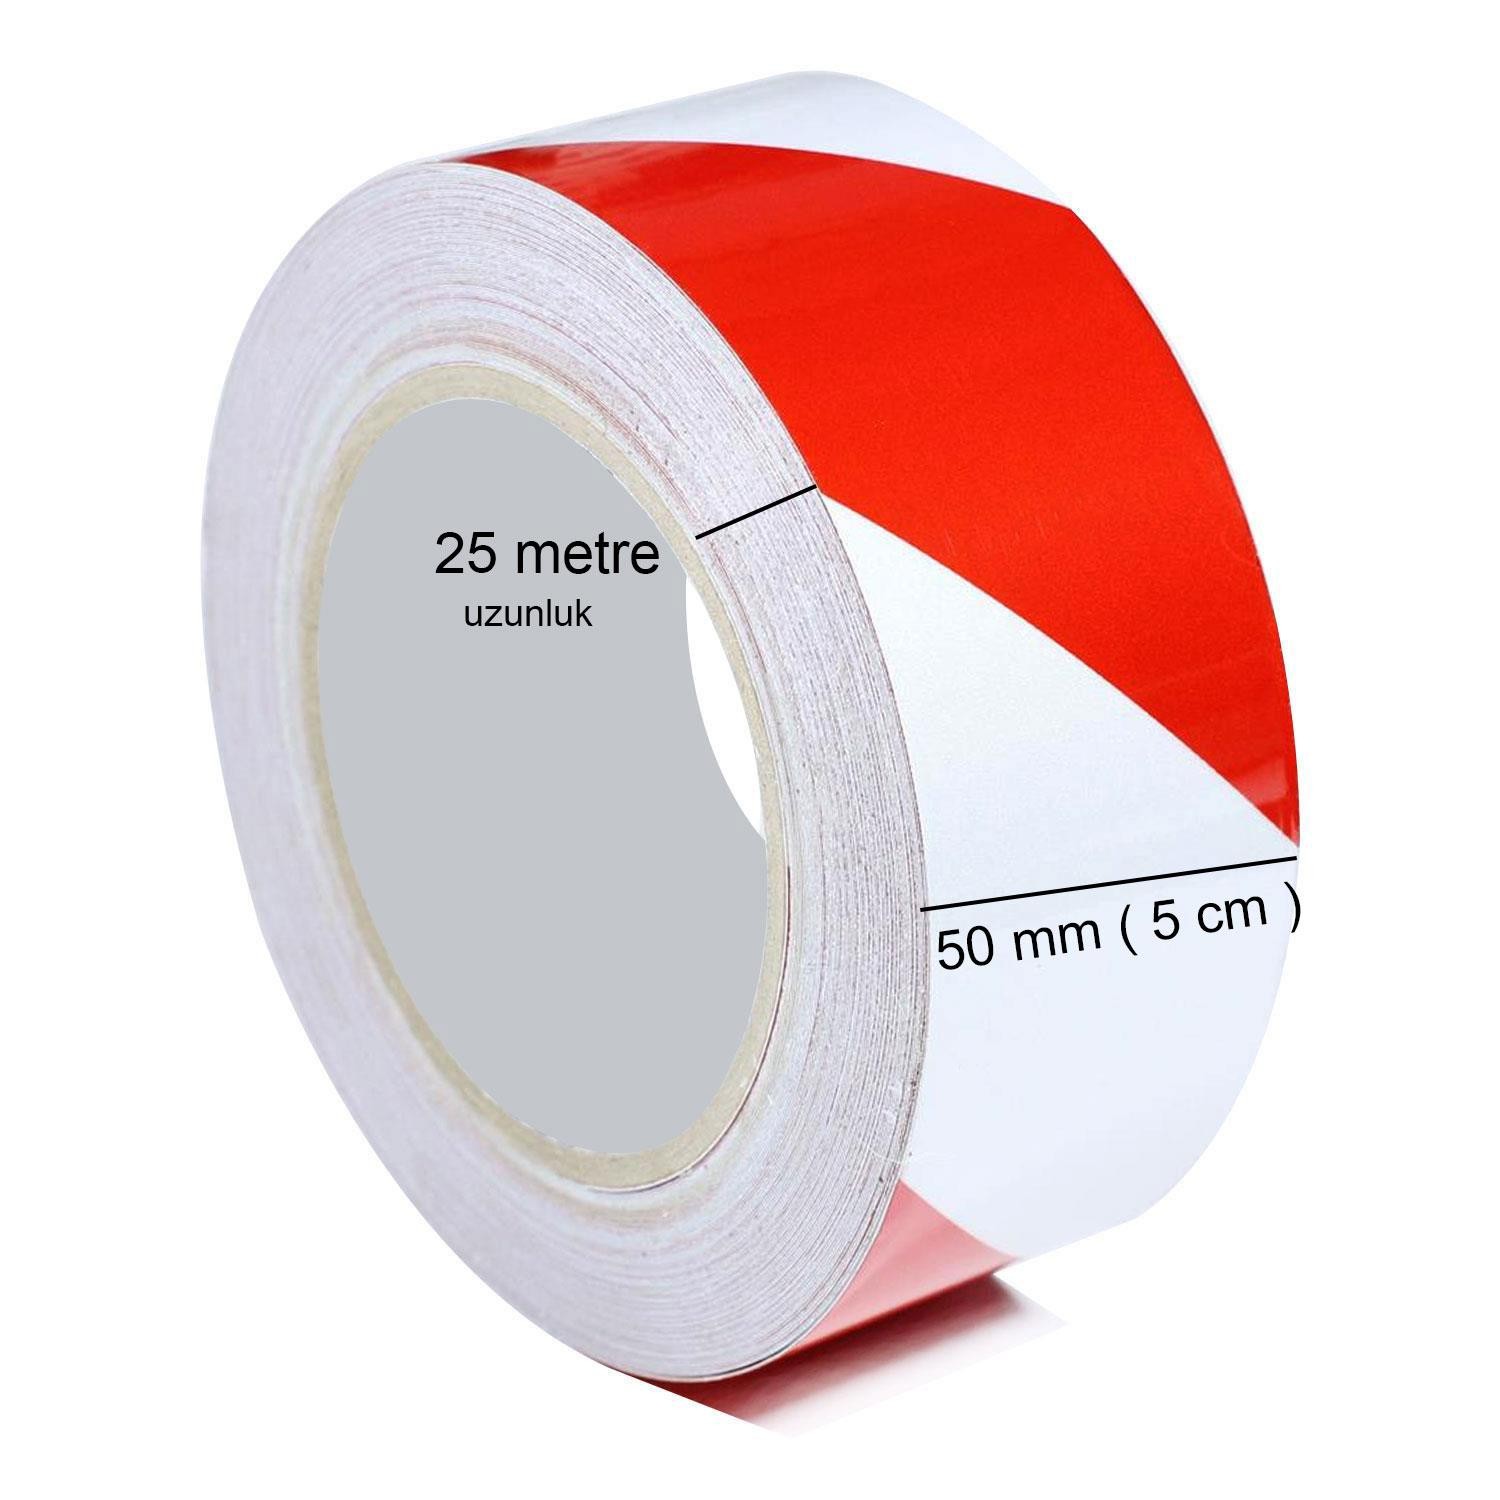 Yer İşaretleme Bandı Kırmızı-Beyaz Pvc Emniyet Zemin İkaz Bant 50 mm x 25 MT